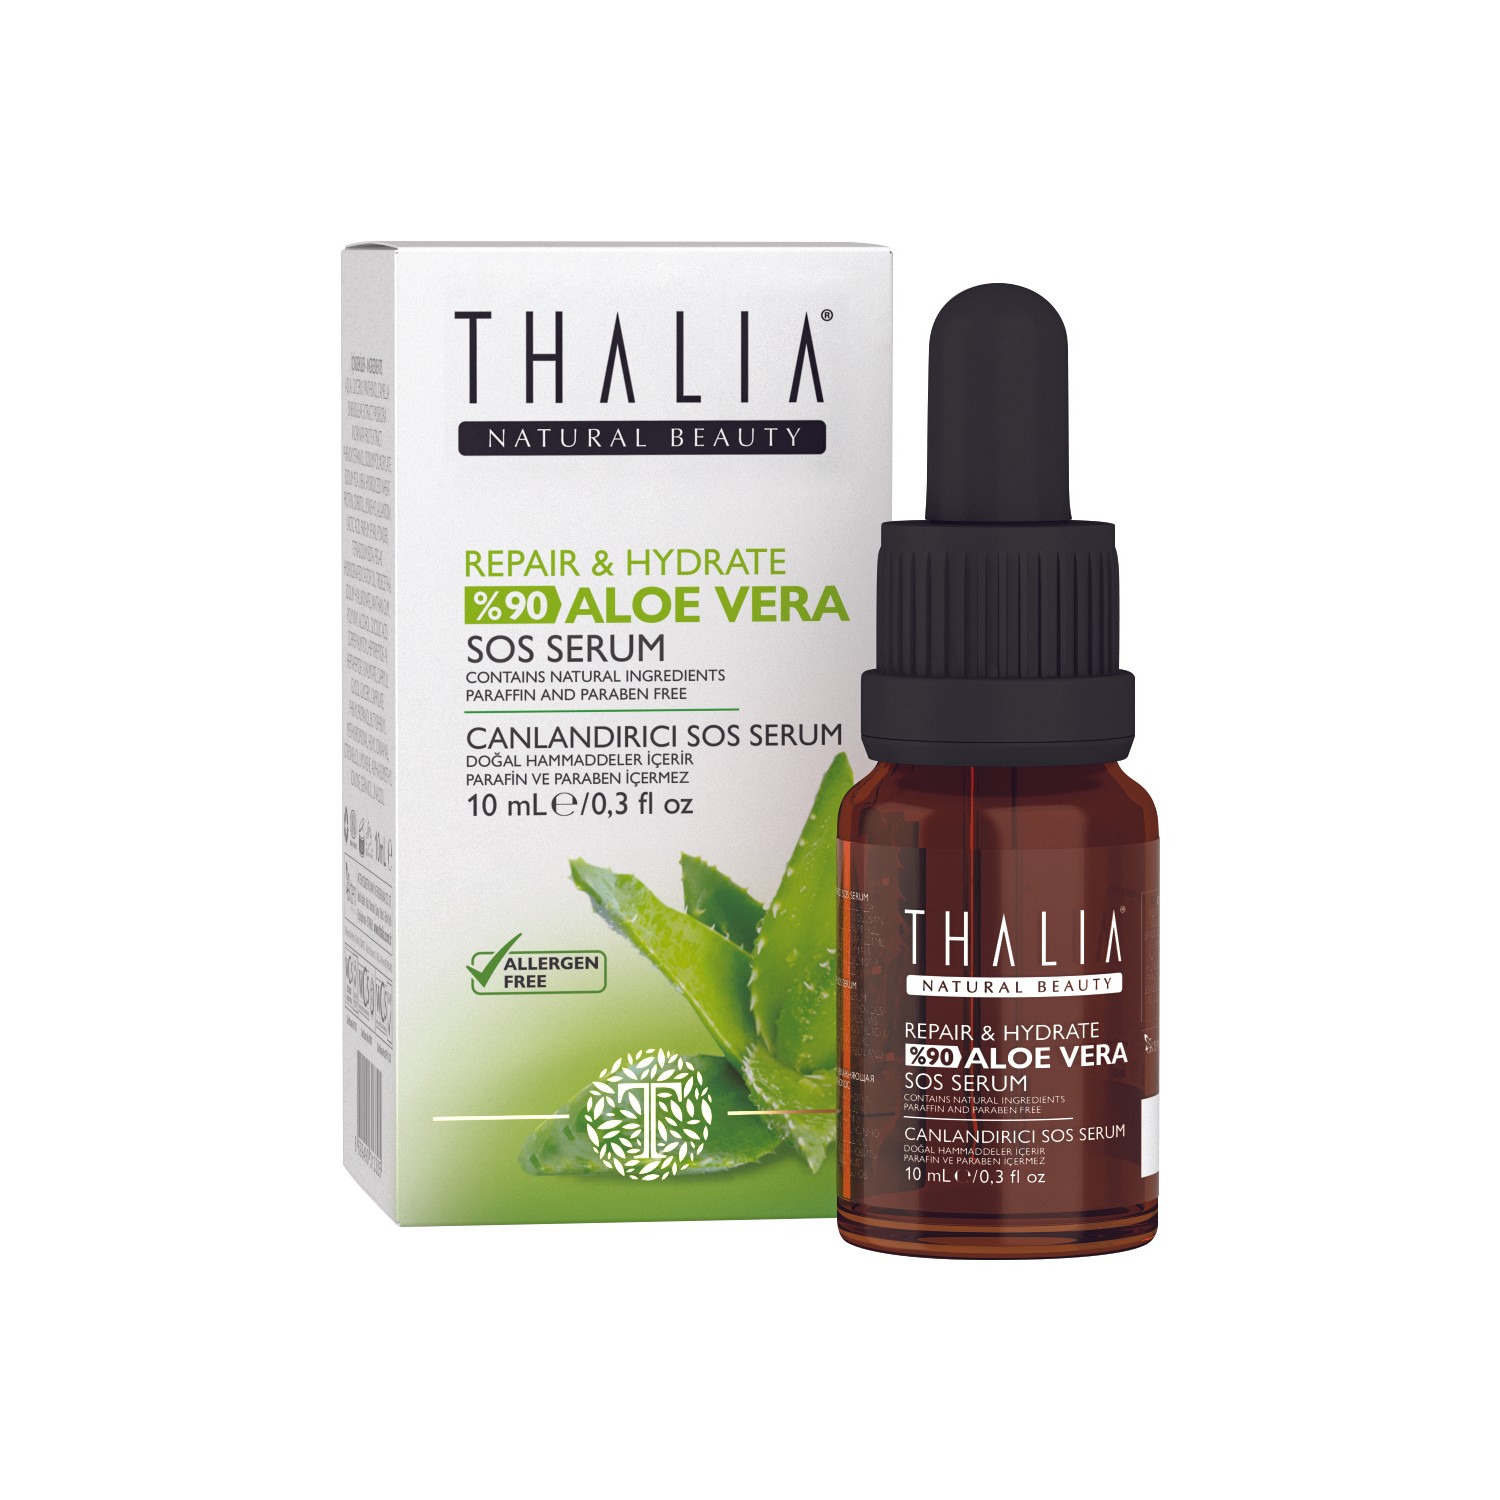 Восстанавливающая сыворотка Thalia 99% Aloe Vera для ухода за кожей и волосами, 10 мл thalia natural beauty repair